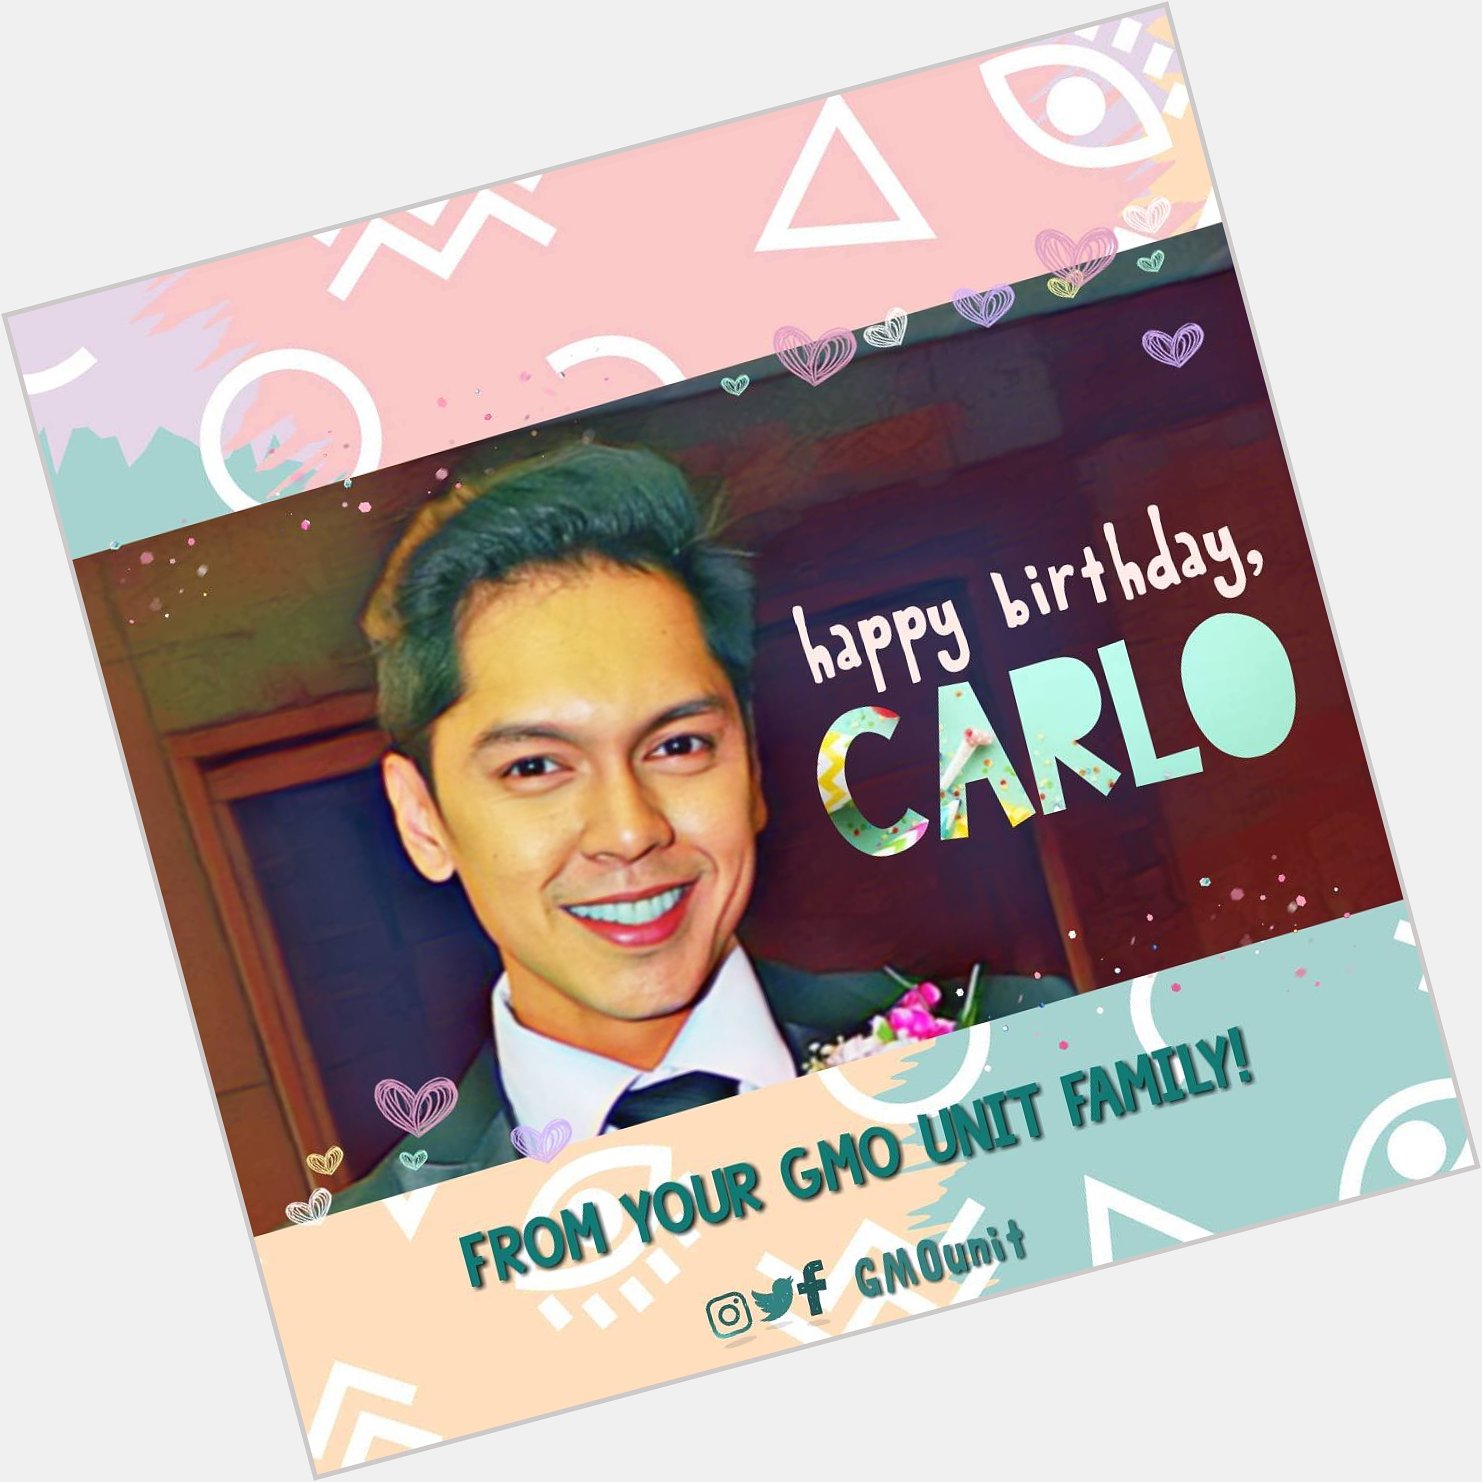 Happy Birthday Carlo Aquino! We hope you had a great day! 